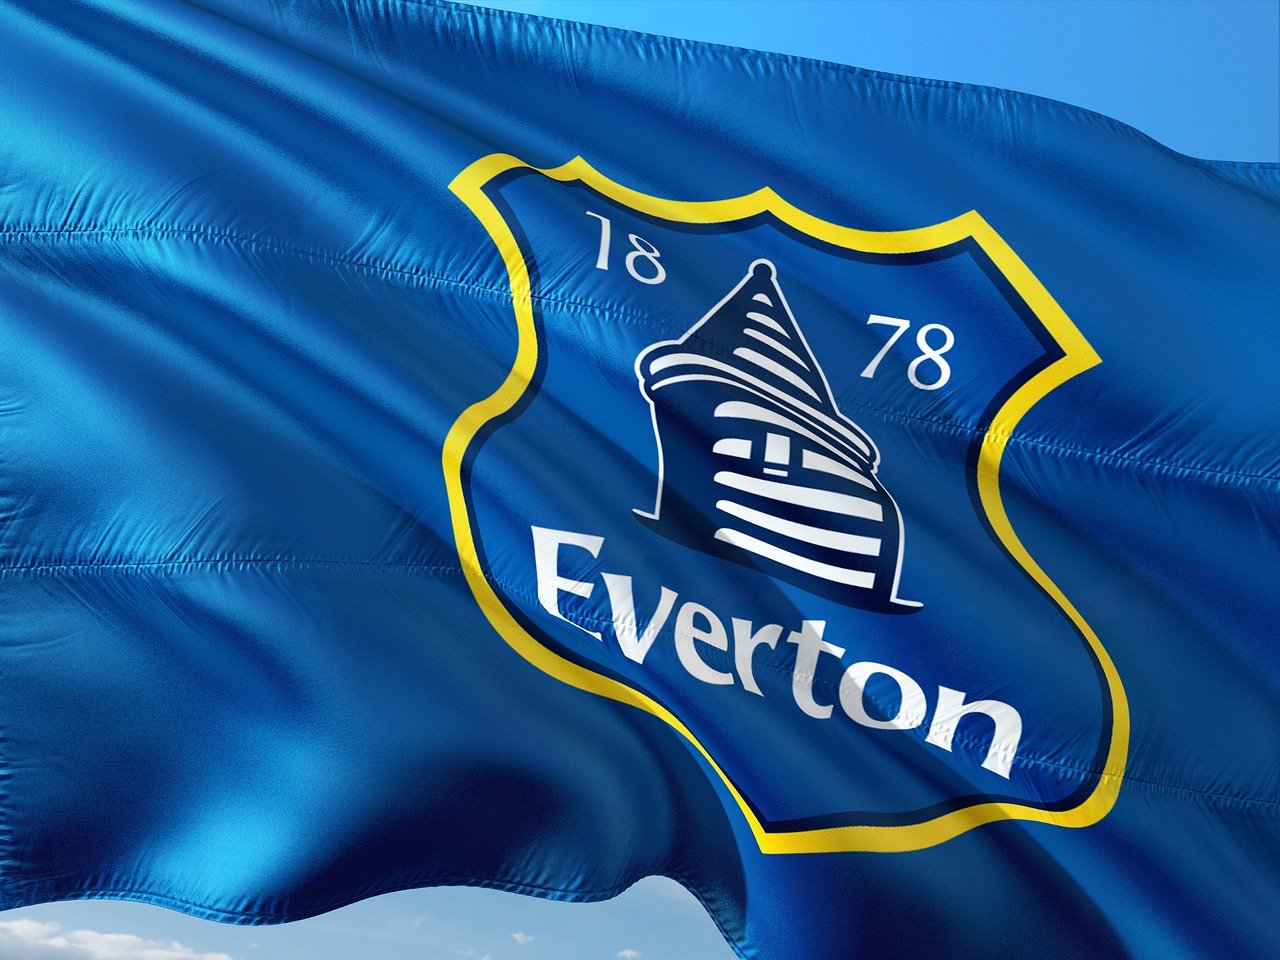 Everton agree club-record sponsorship deal with Stake.com - Sponsorship - iGB